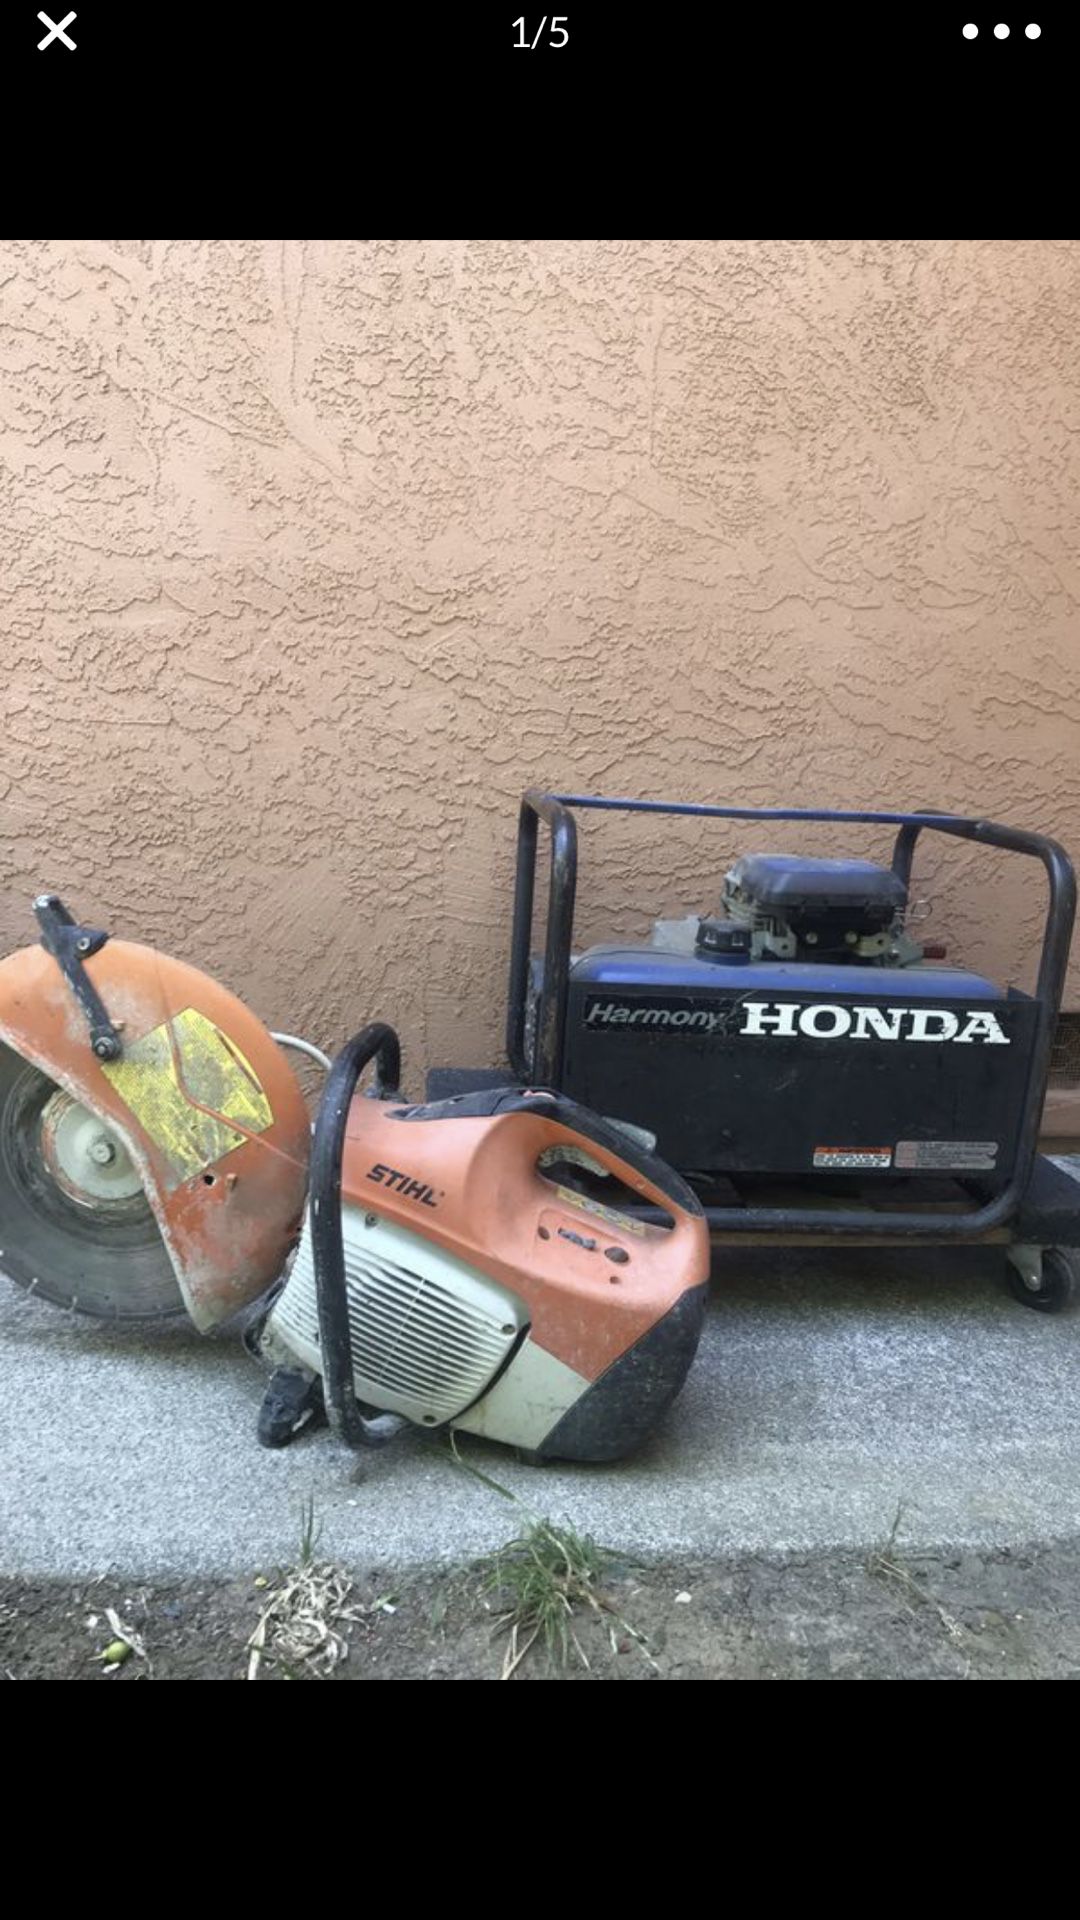 STIHL cutsaw HONDA generator for sale